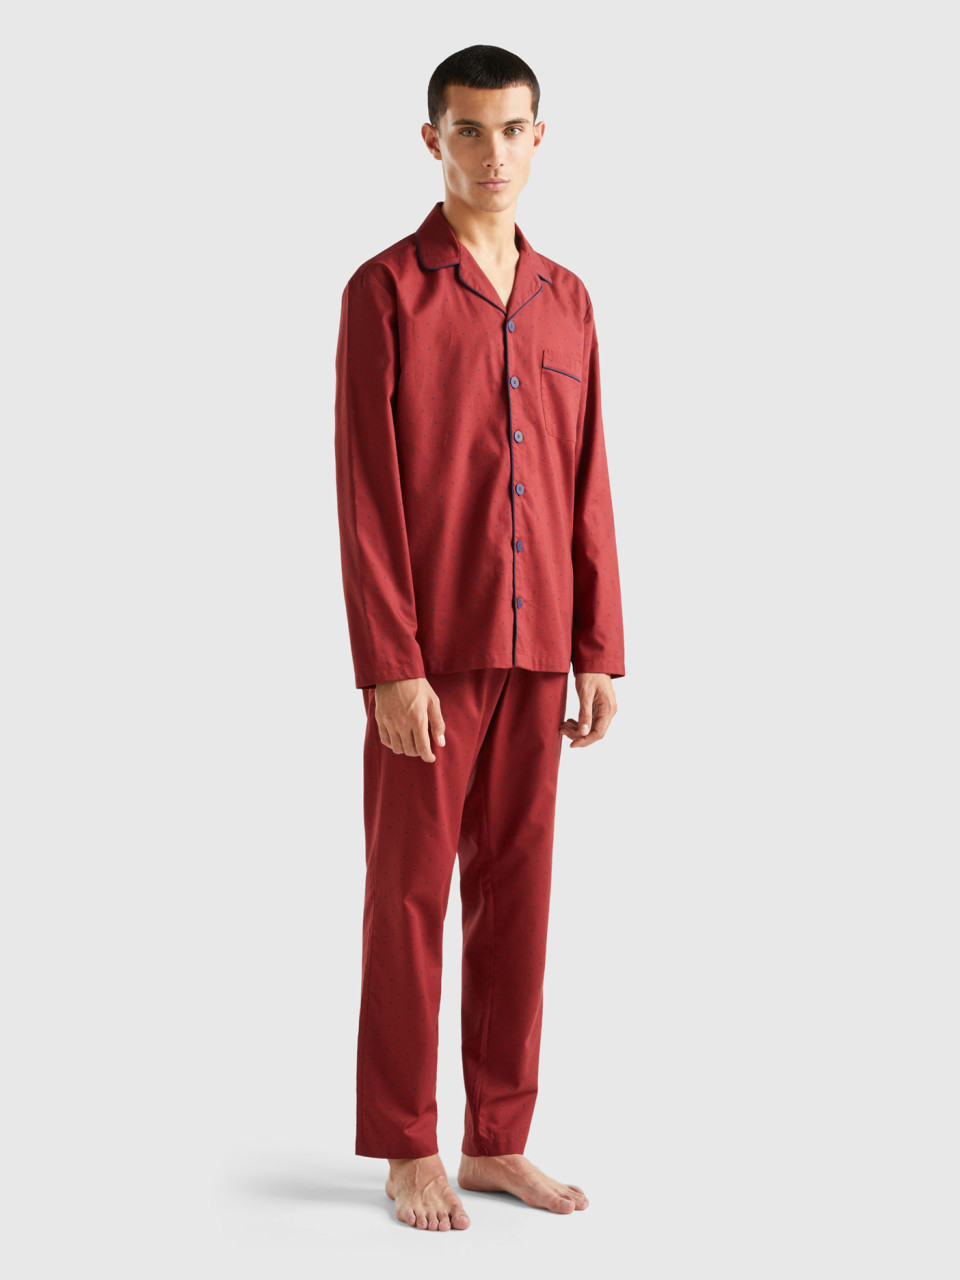 Benetton, Polka Dot Pyjamas With Patch, Red, Men